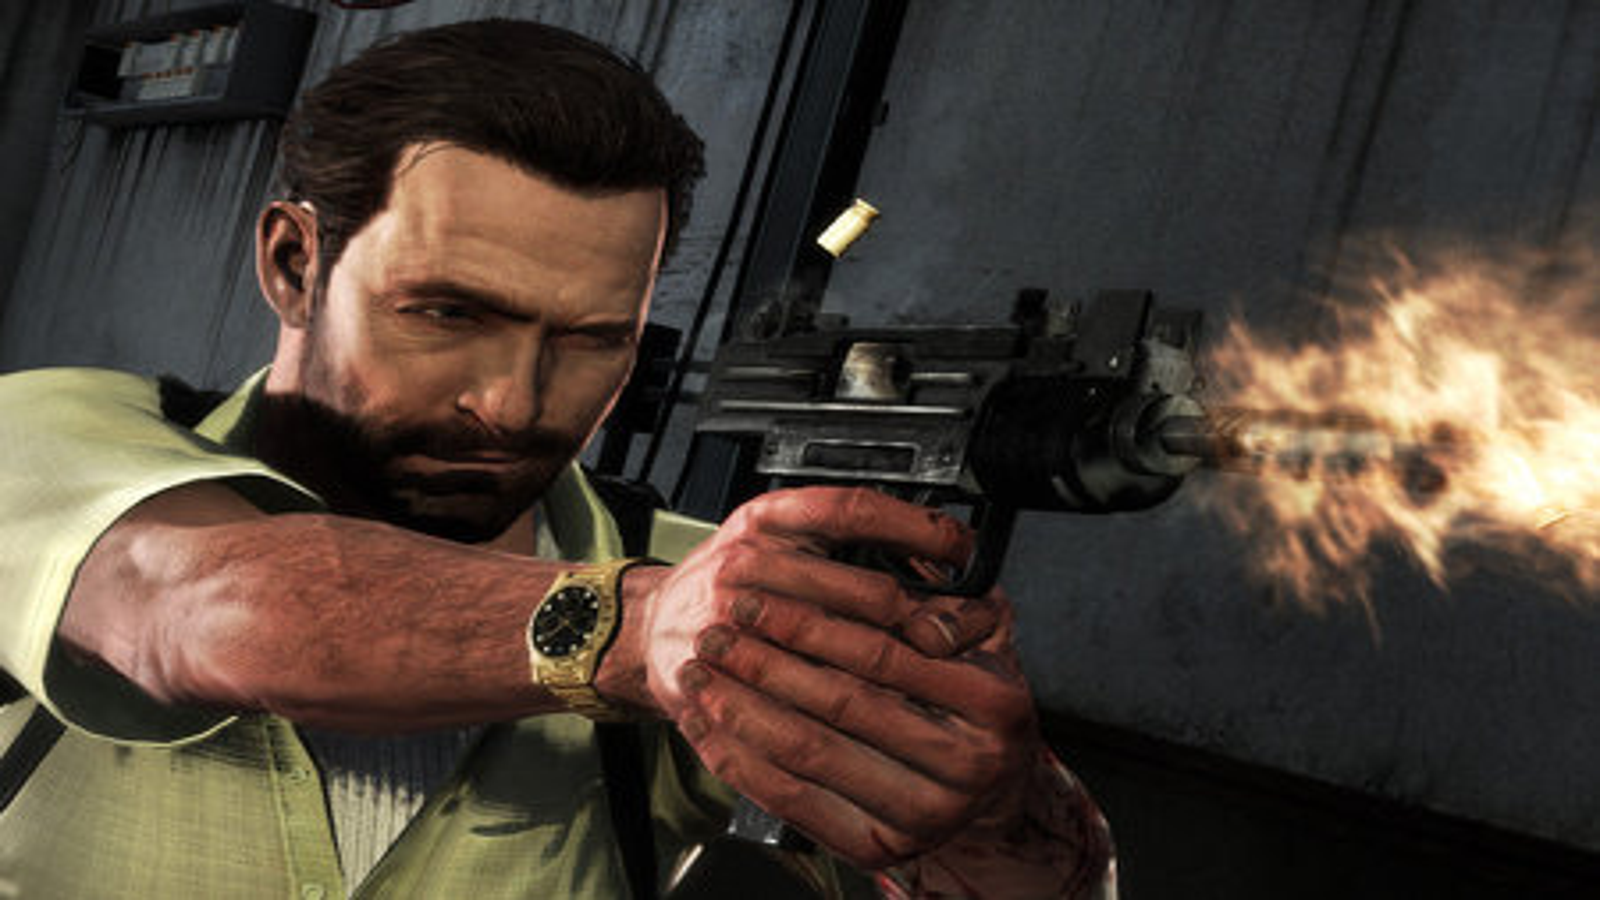  Max Payne 3 : Video Games